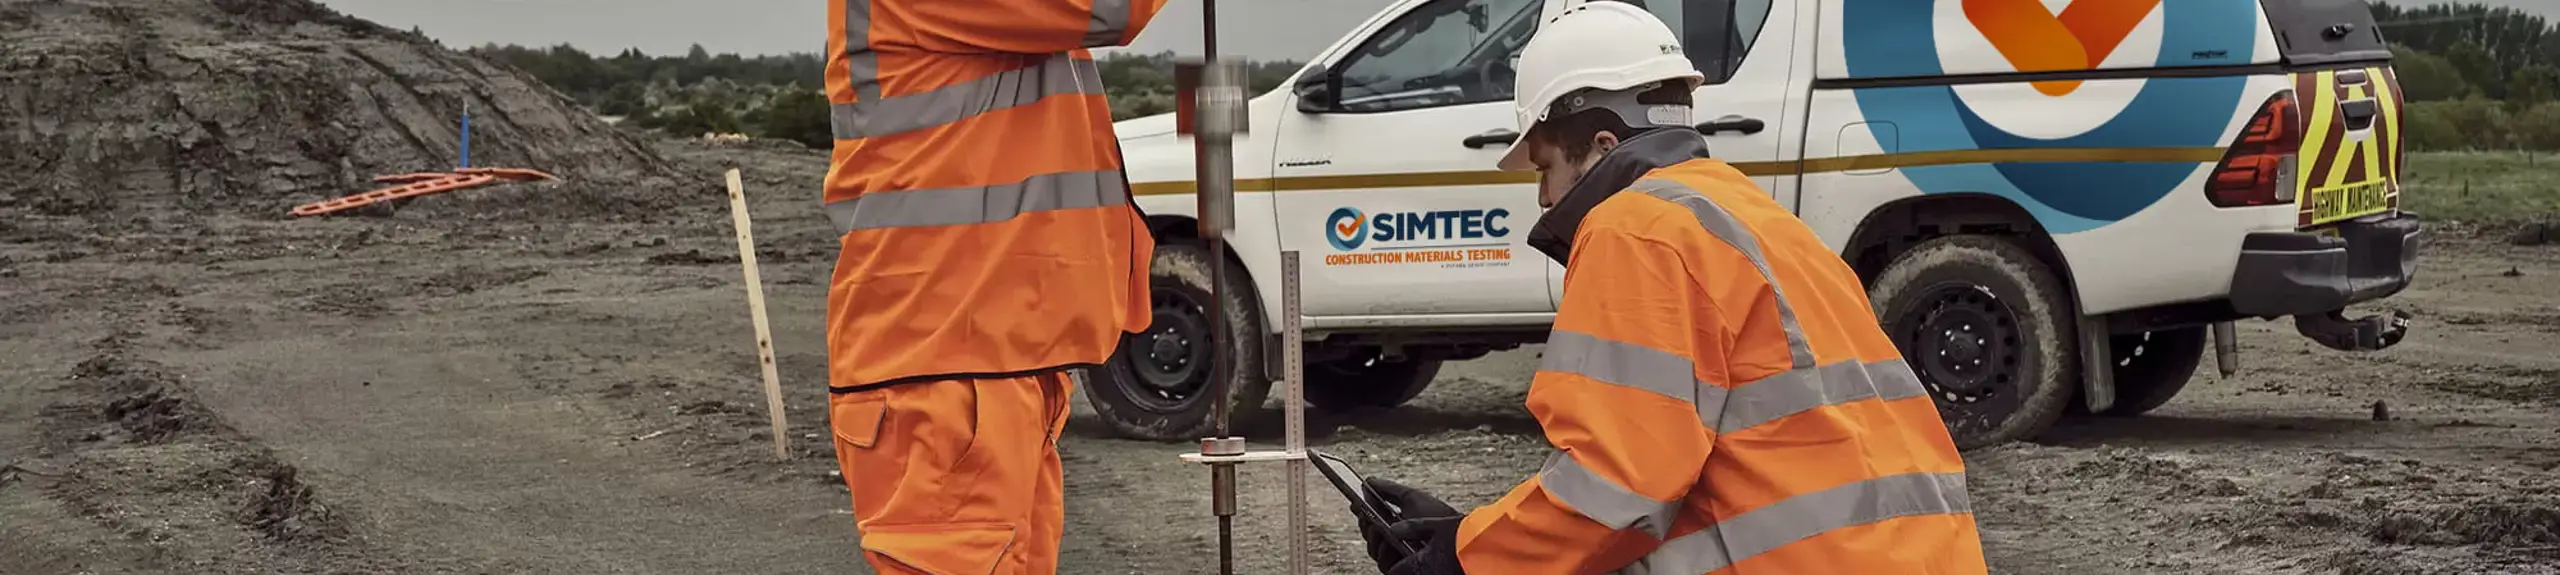 Simtec engineers testing on site